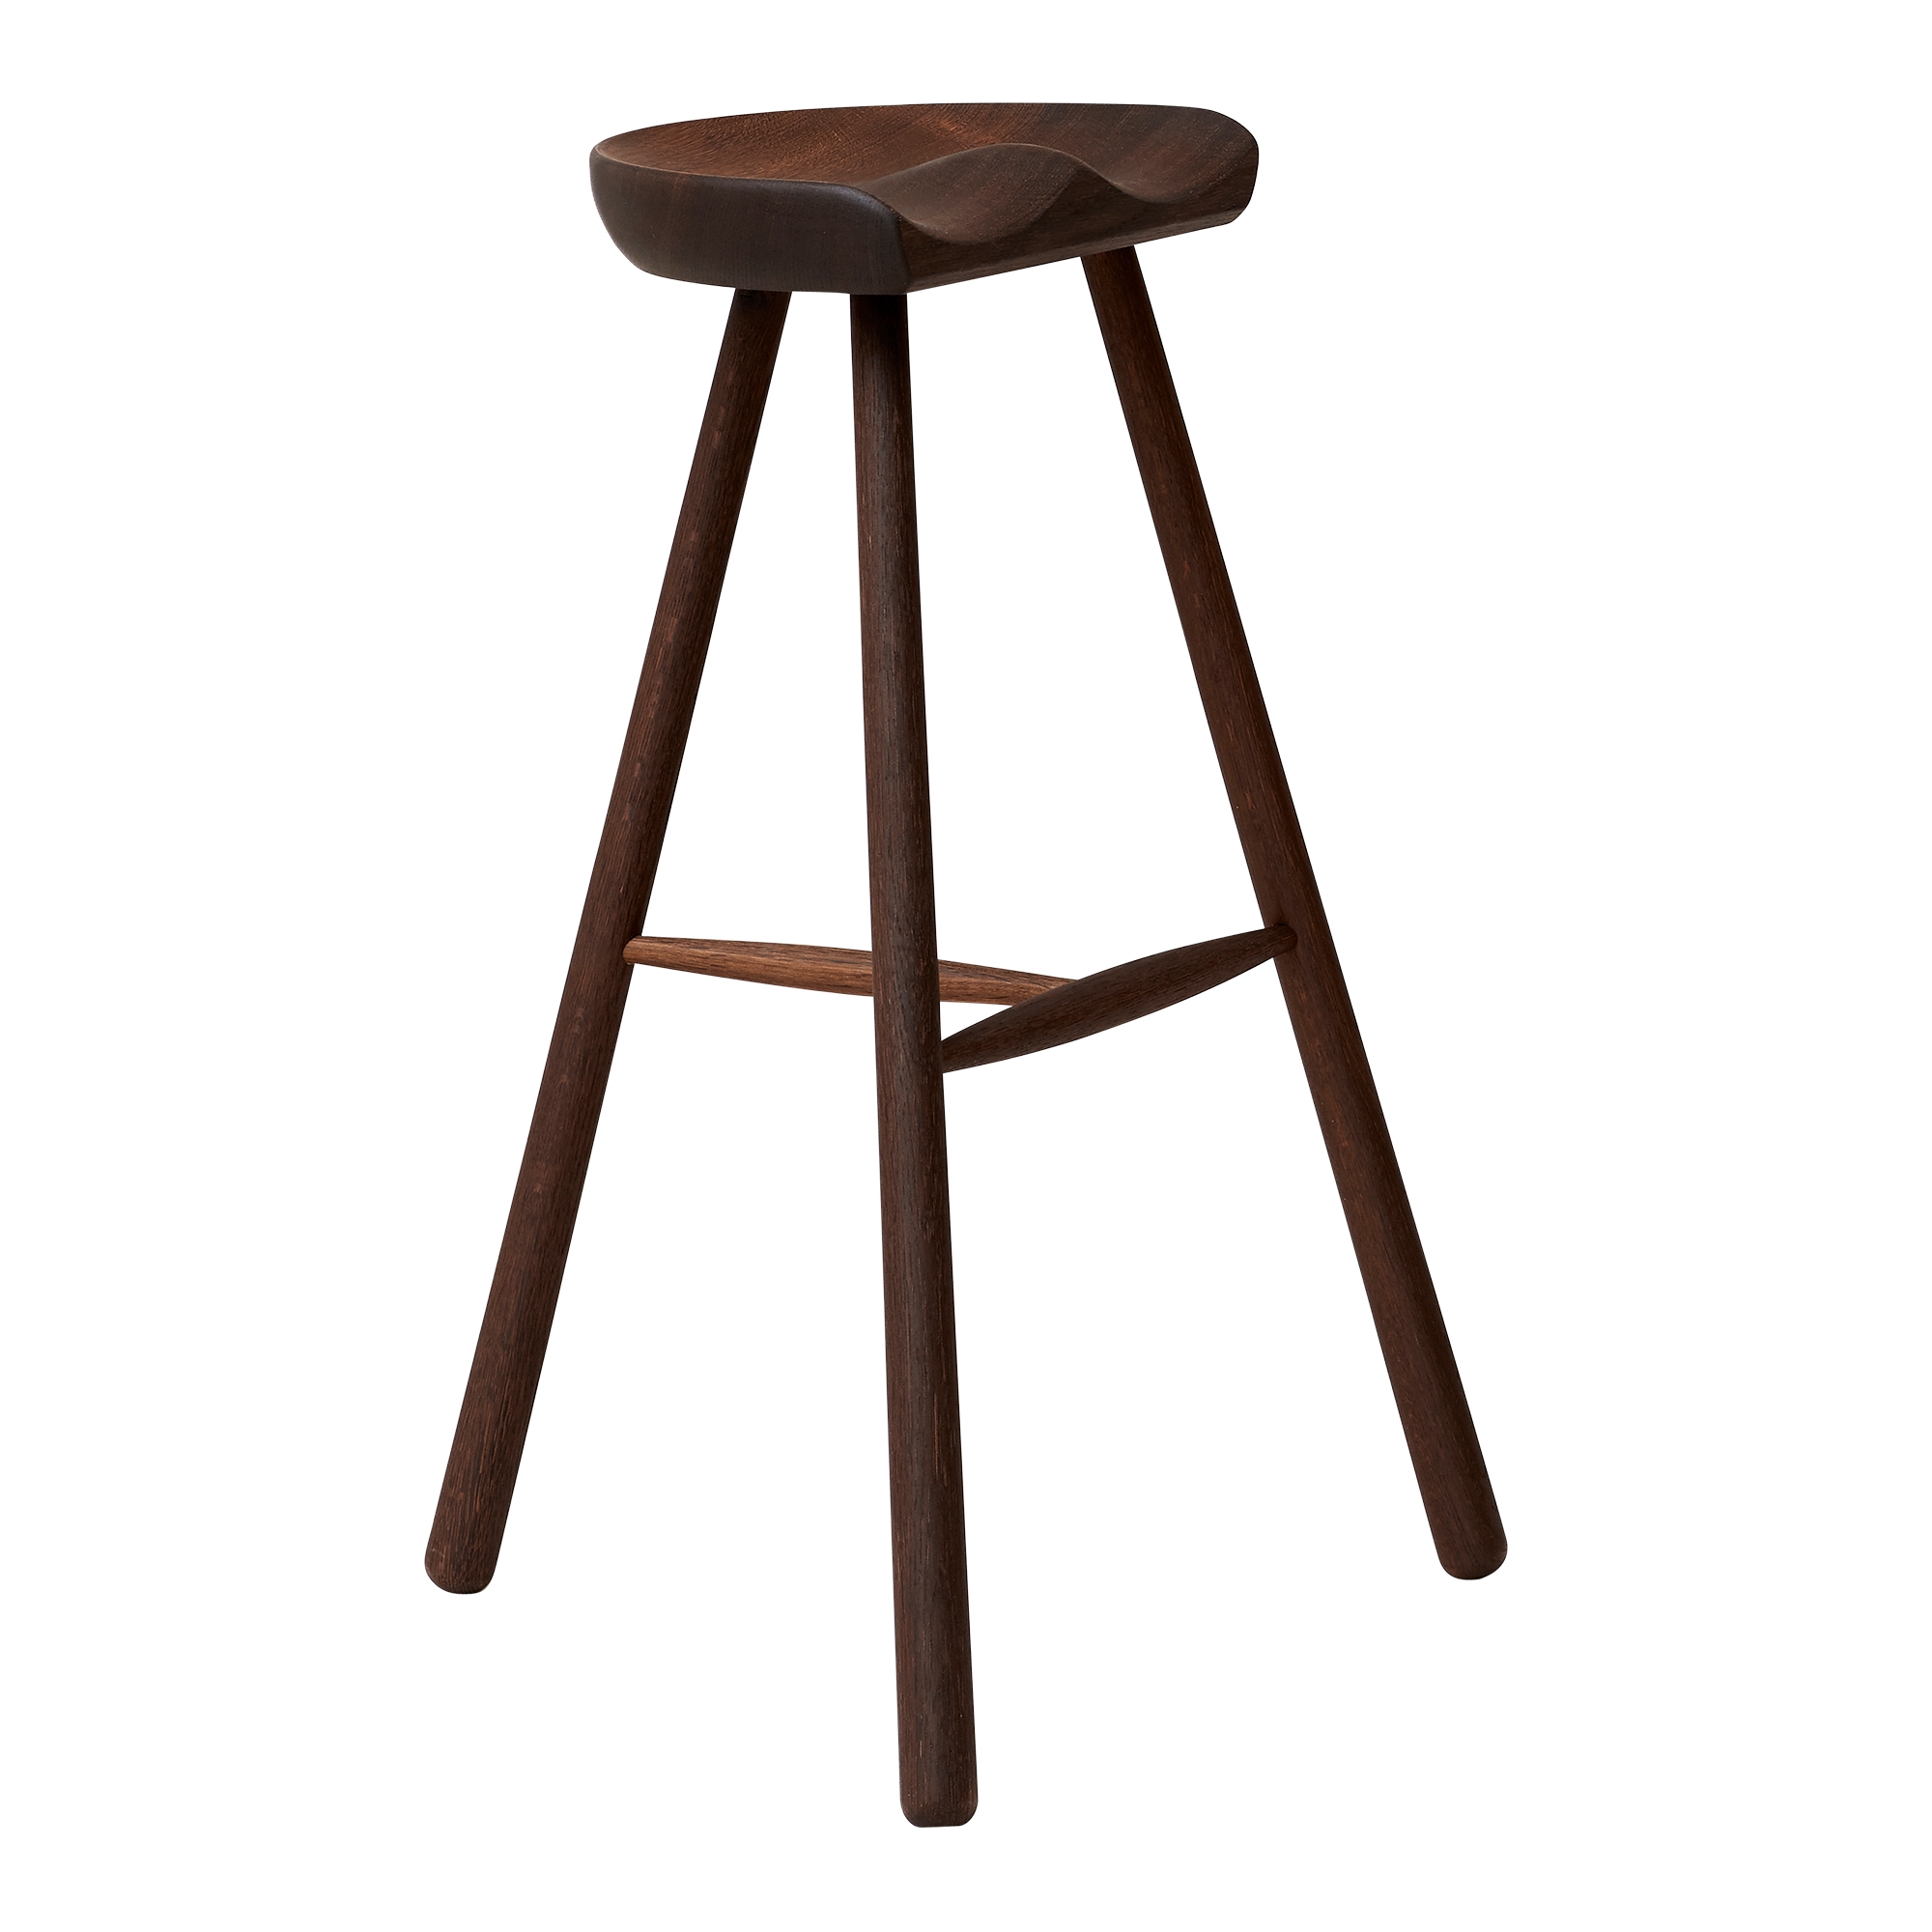 Form & Refine Shoemaker Chair No. 78 Smoked Oak